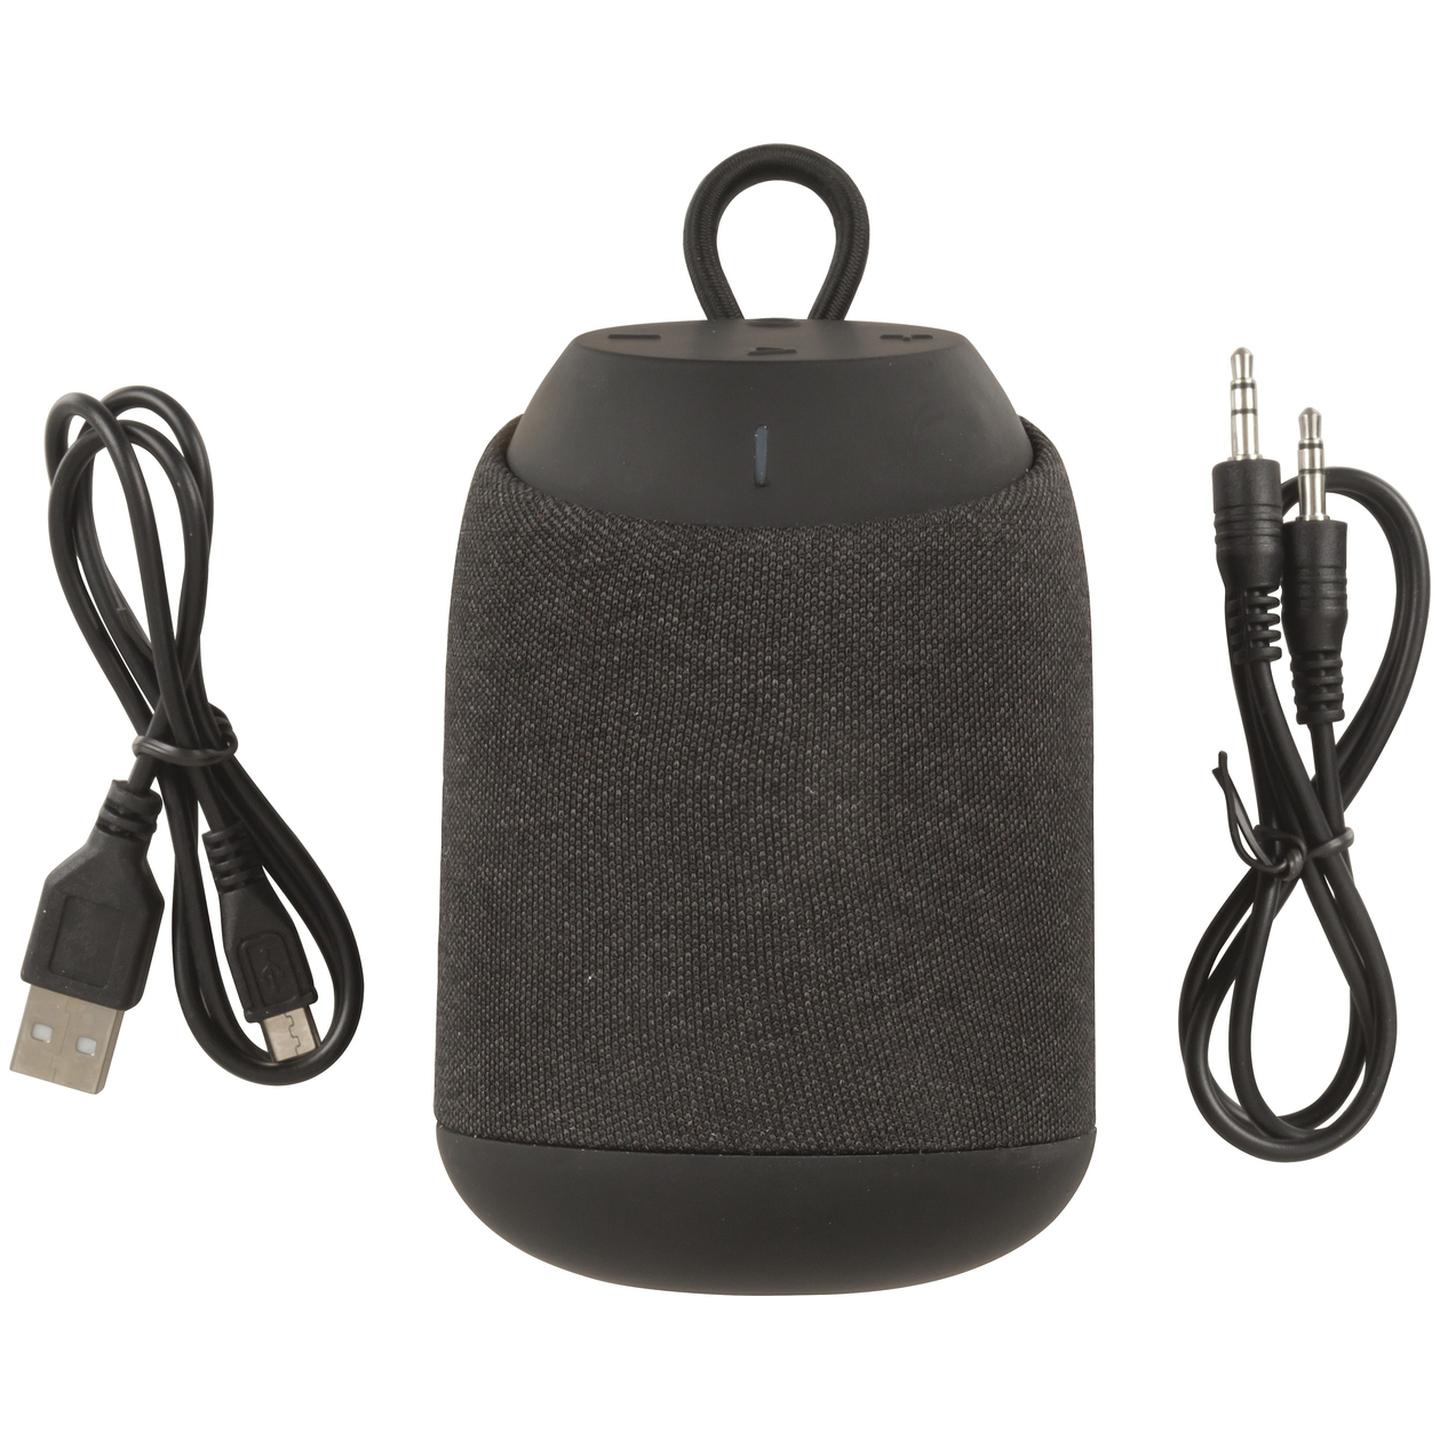 Mini Waterproof 360 Speaker with Bluetooth Technology